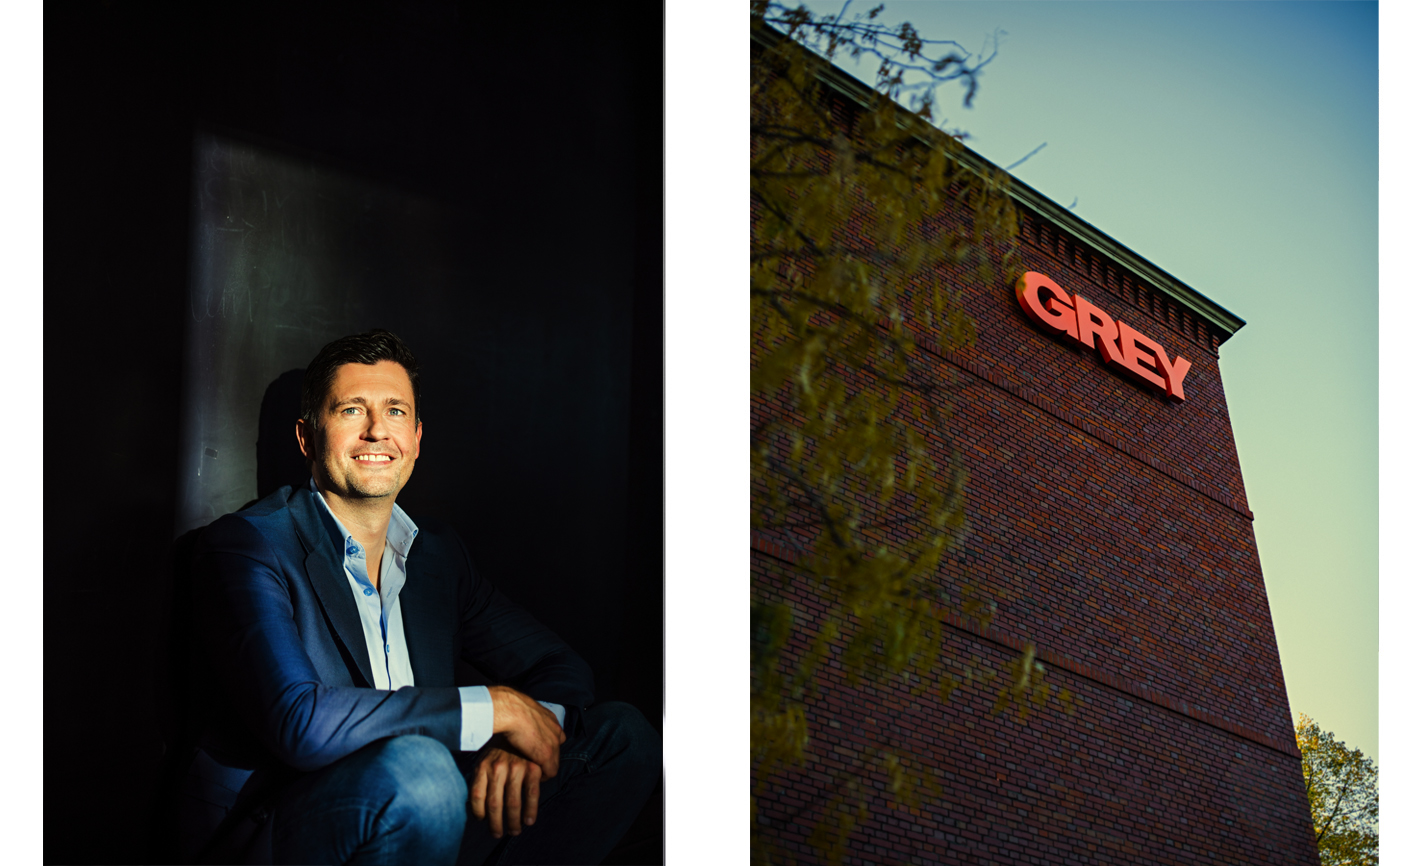 Grey / CEO Jan-Philipp Jahn